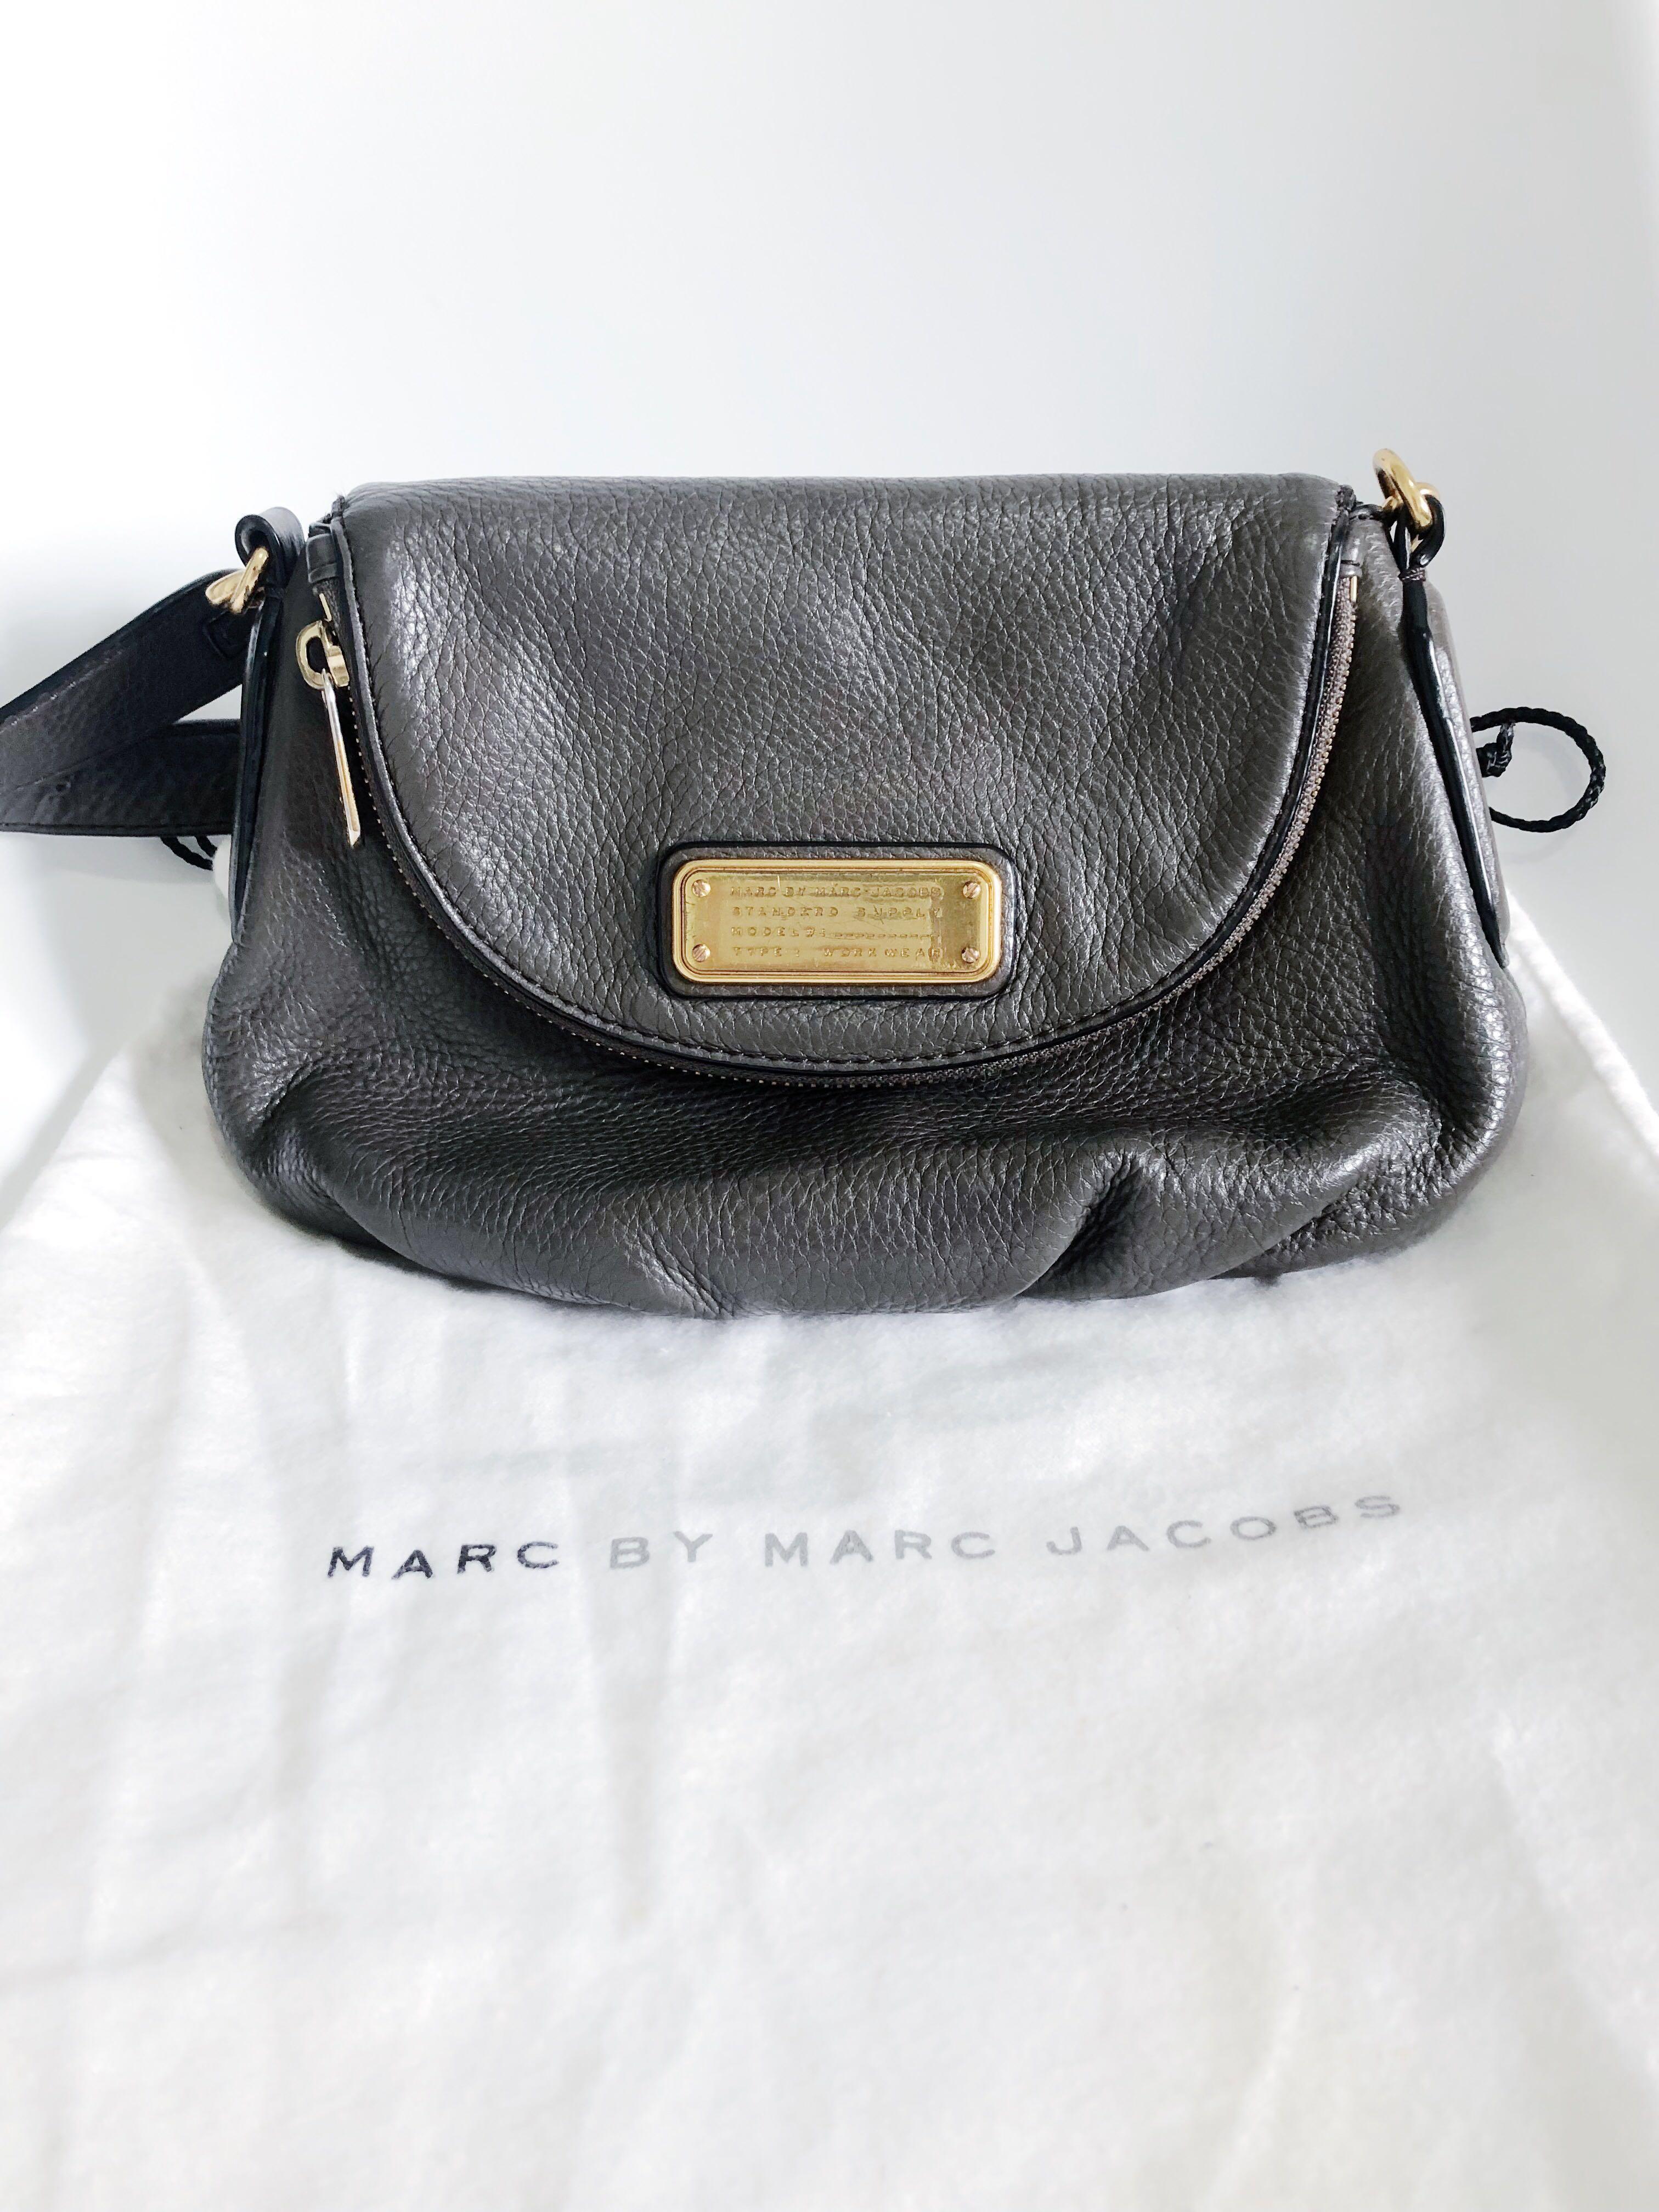 marc by marc jacobs black crossbody bag